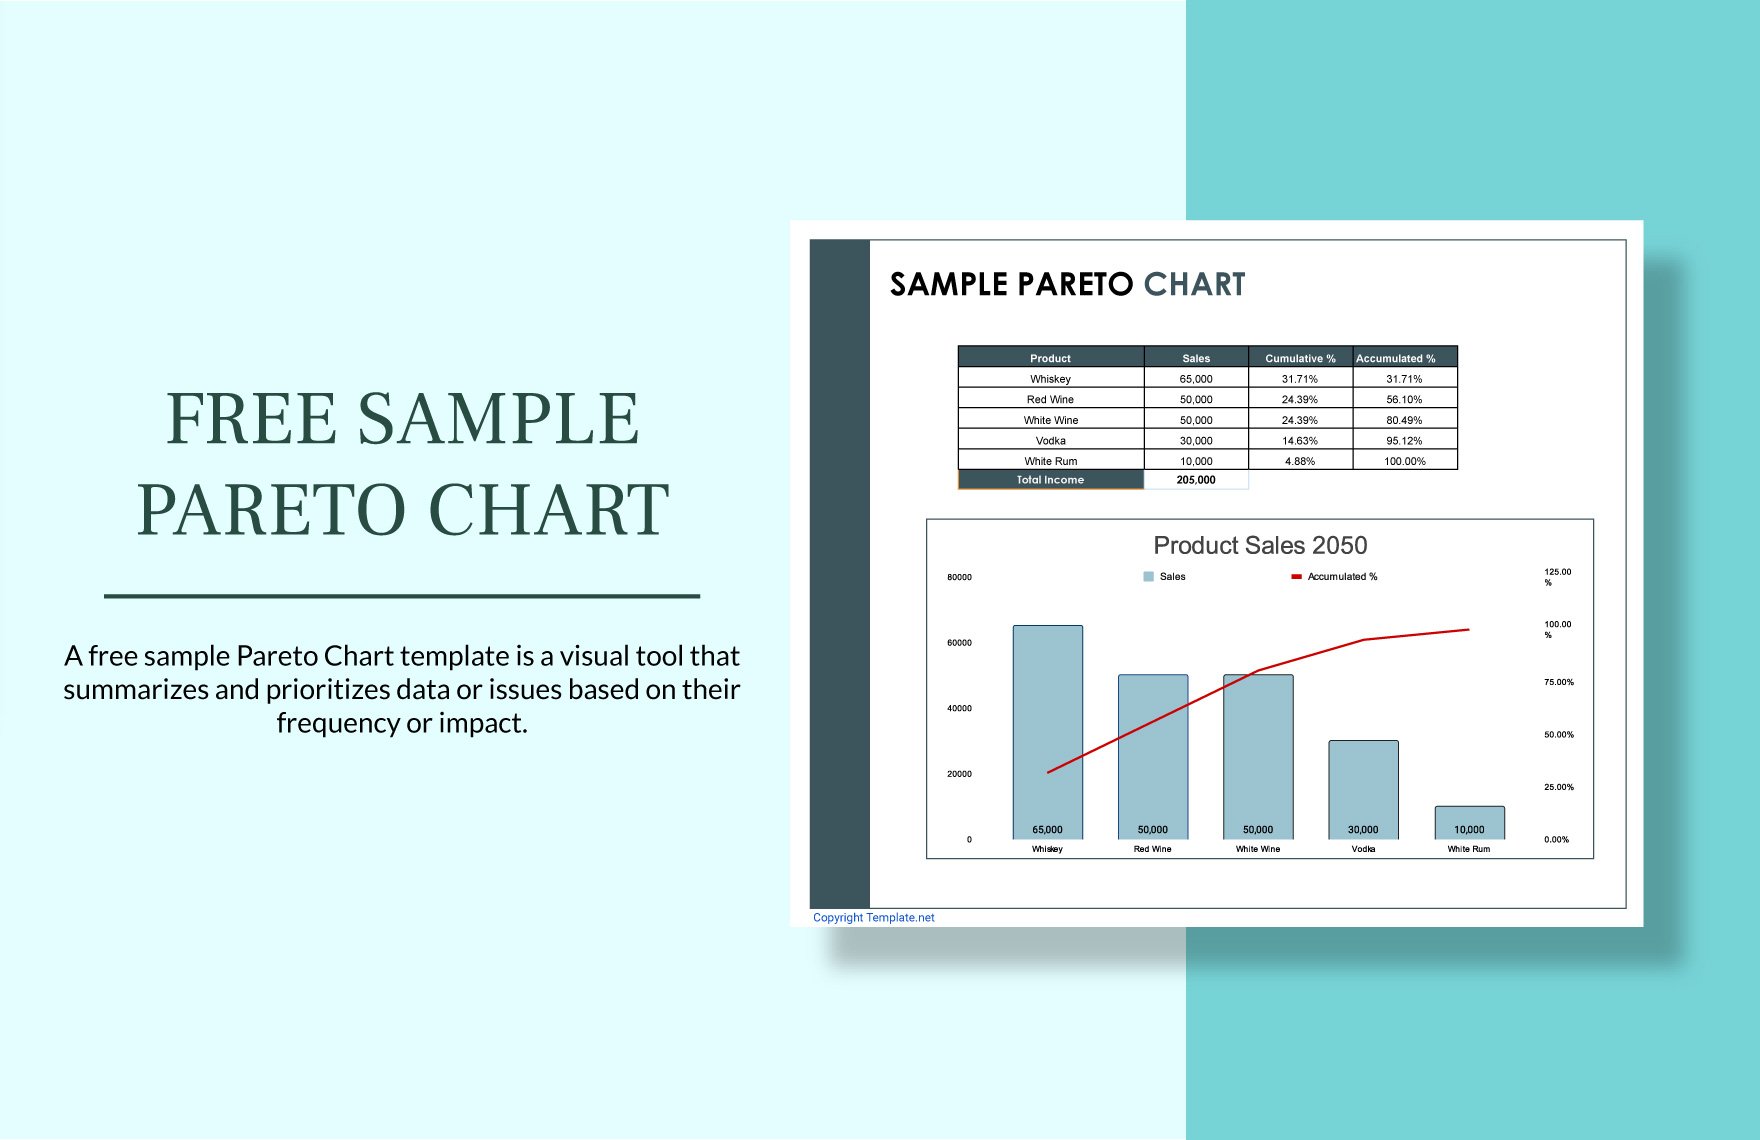 Free Sample Pareto Chart